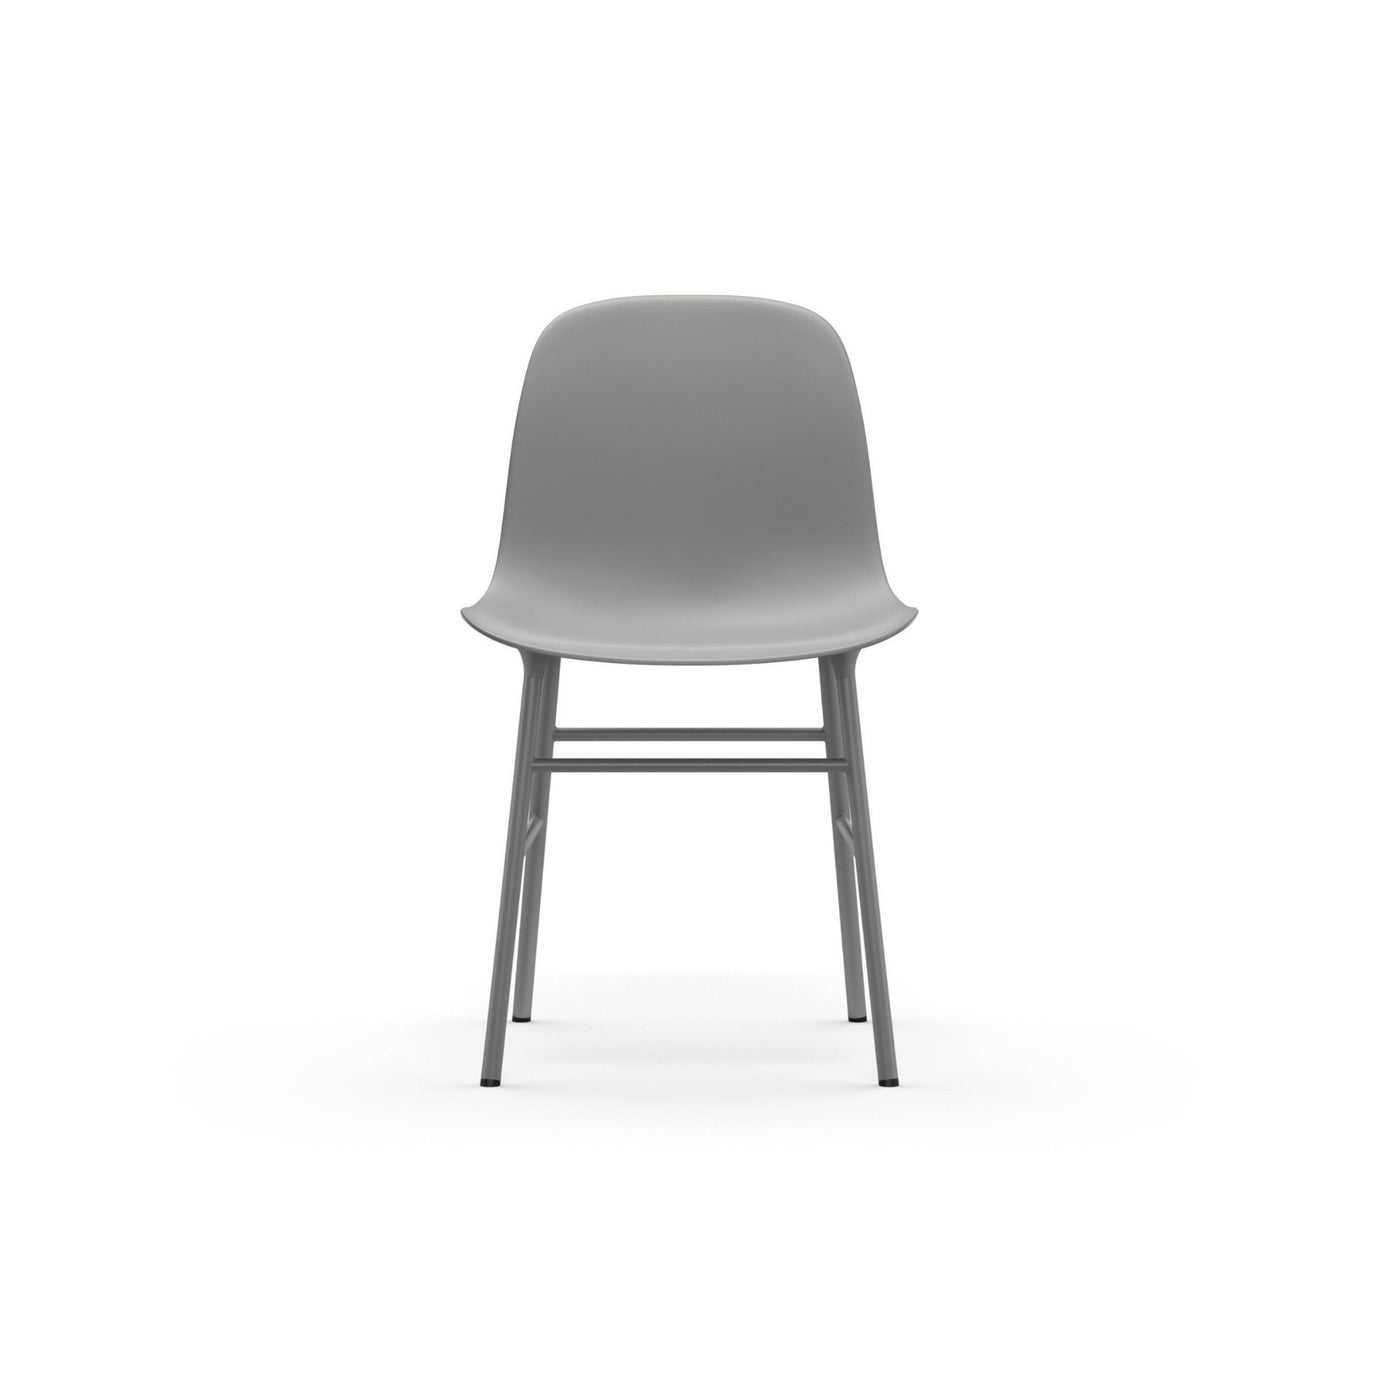 Normann Copenhagen Form Chair Steel at someday designs #colour_grey